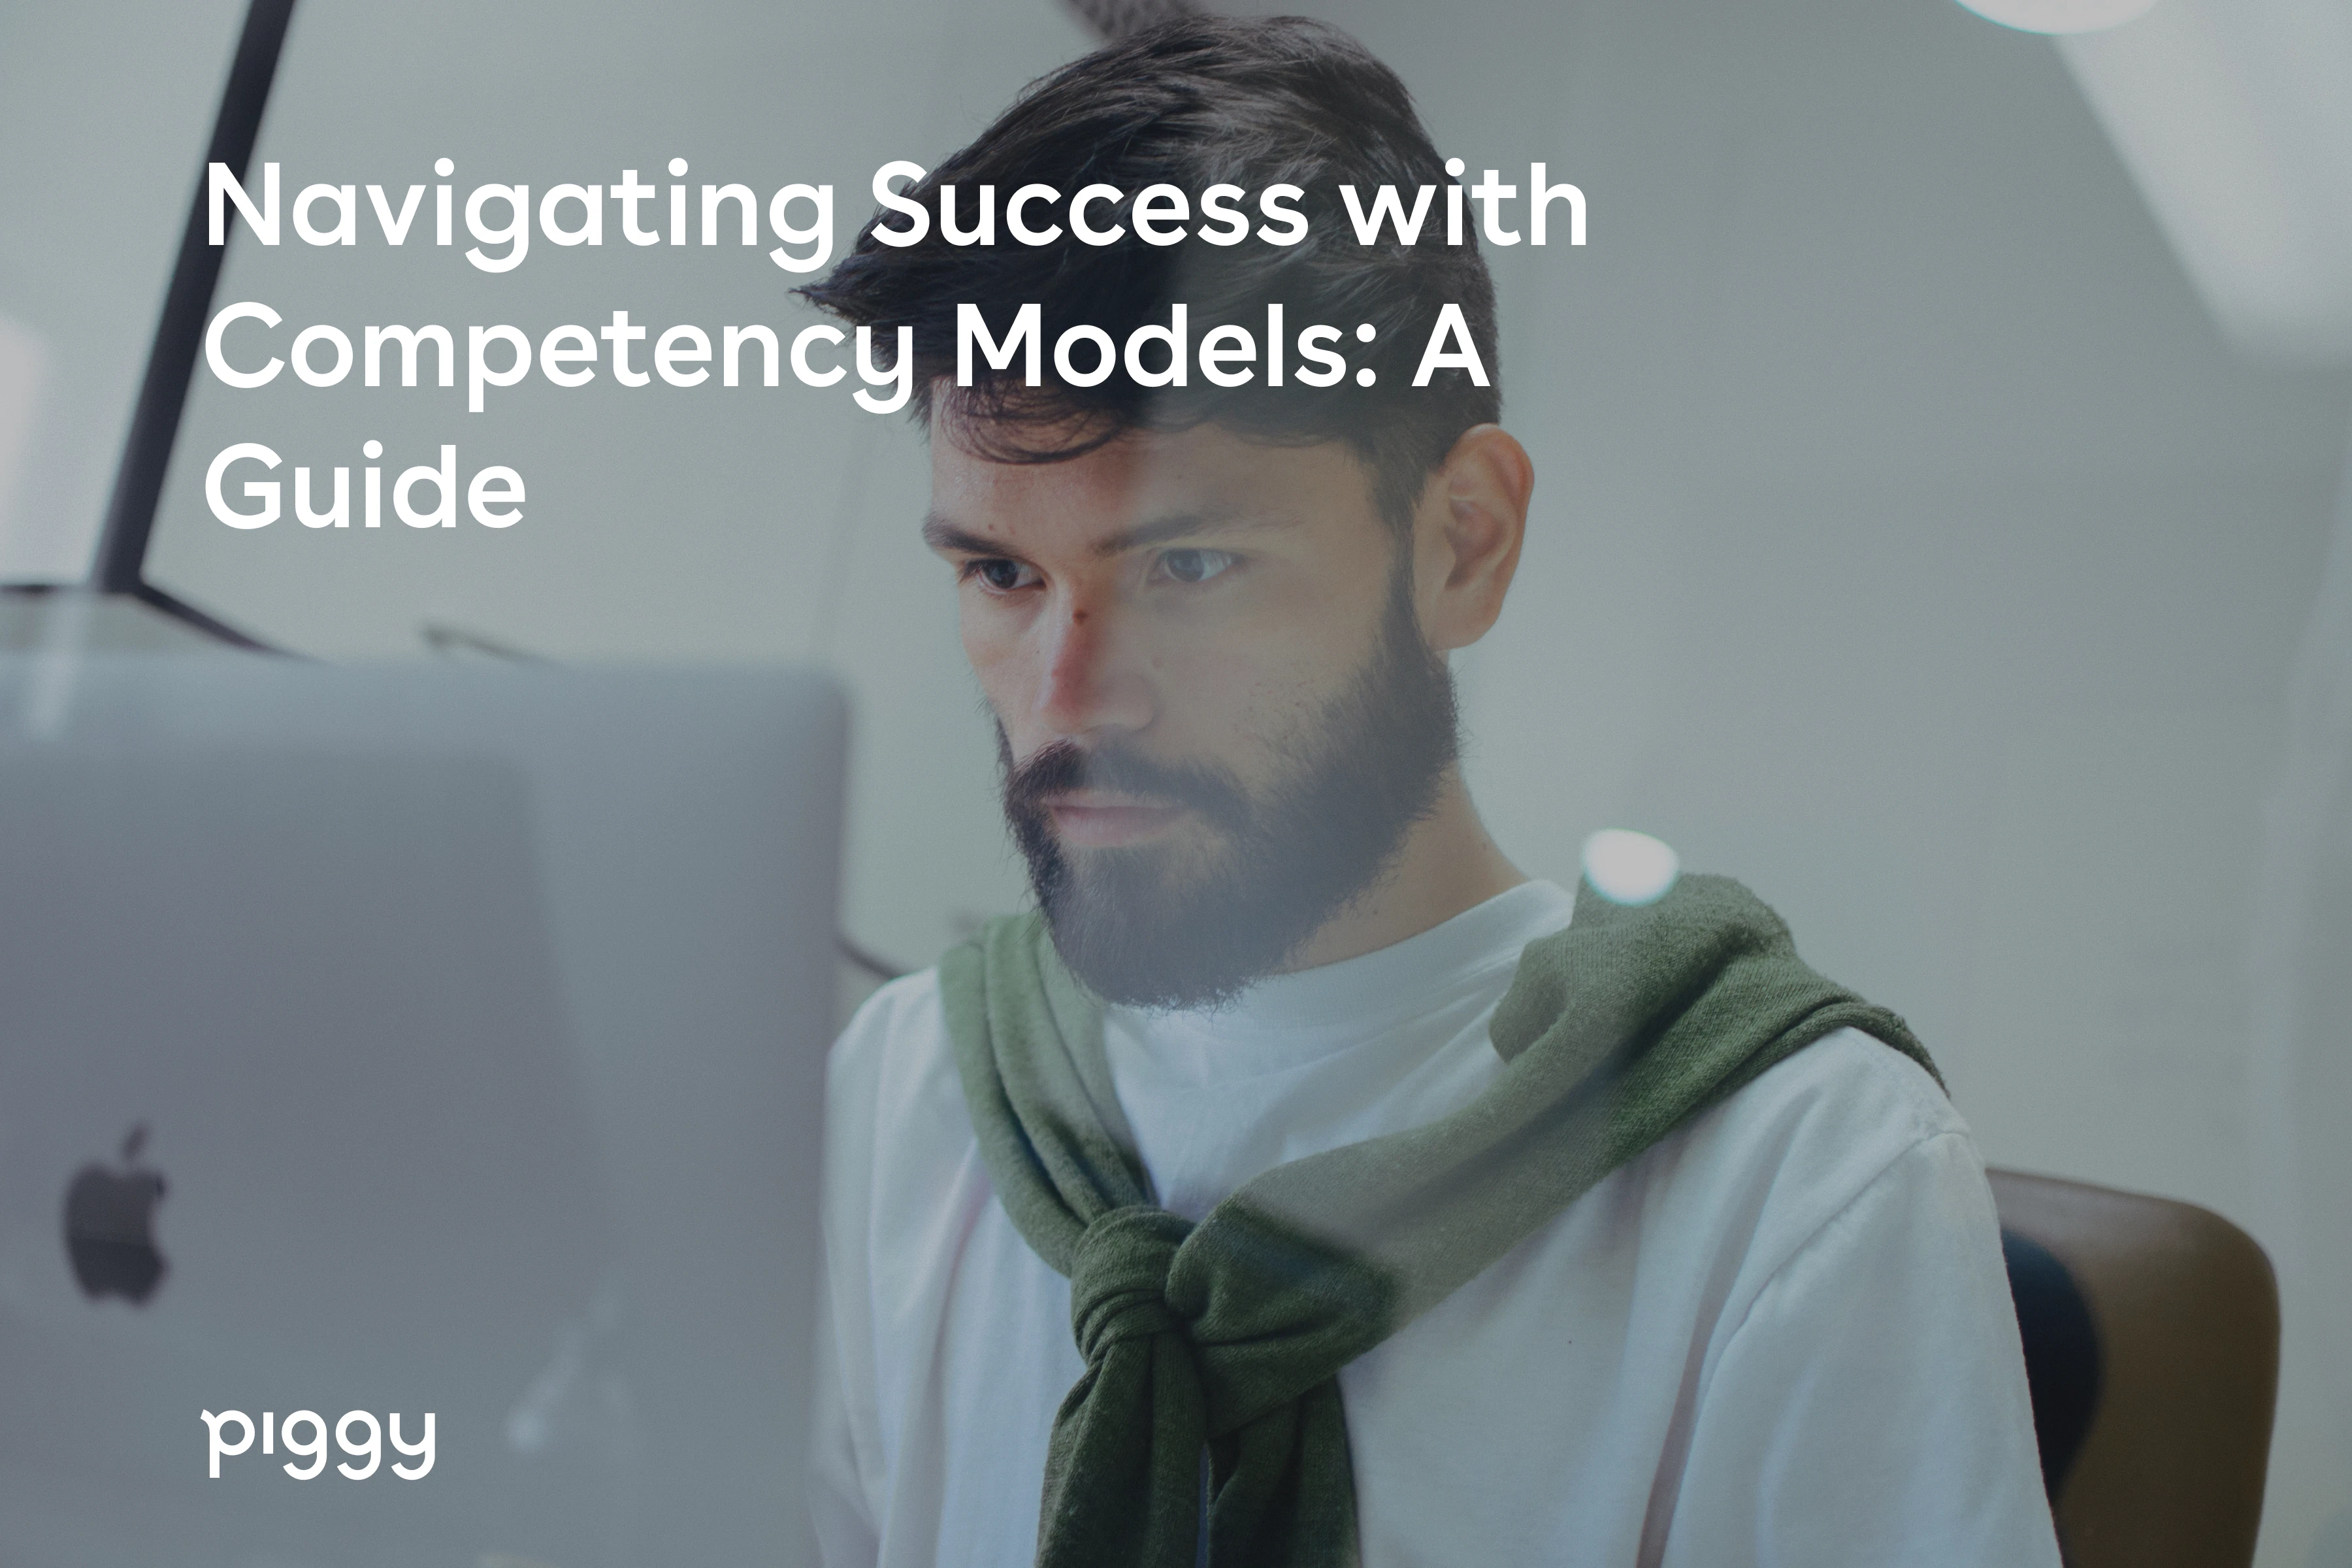 competency-model